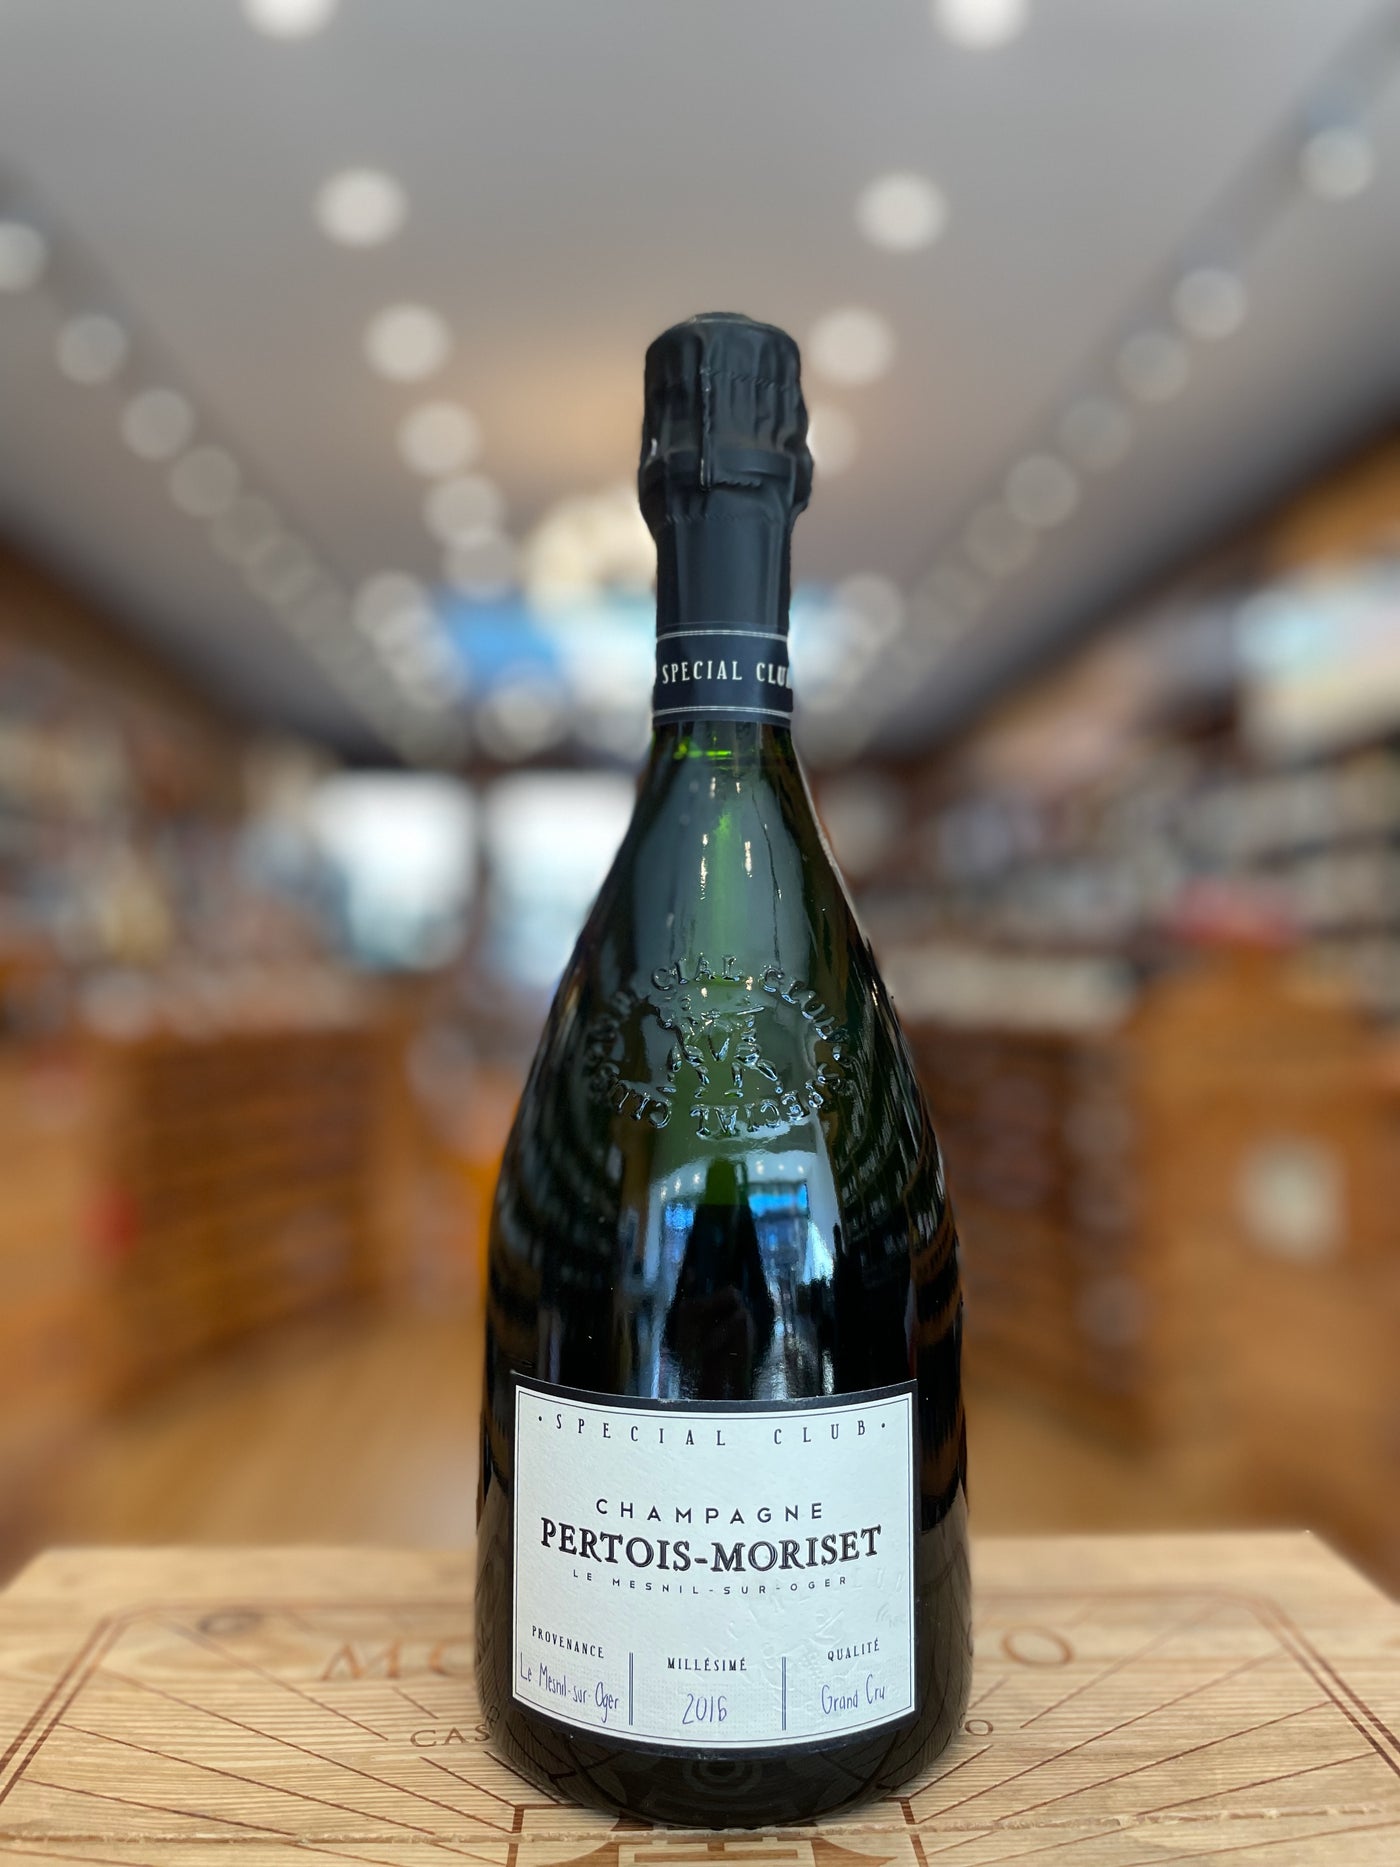 Pertois-Moriset 'Special Club' Champagne Brut 2016